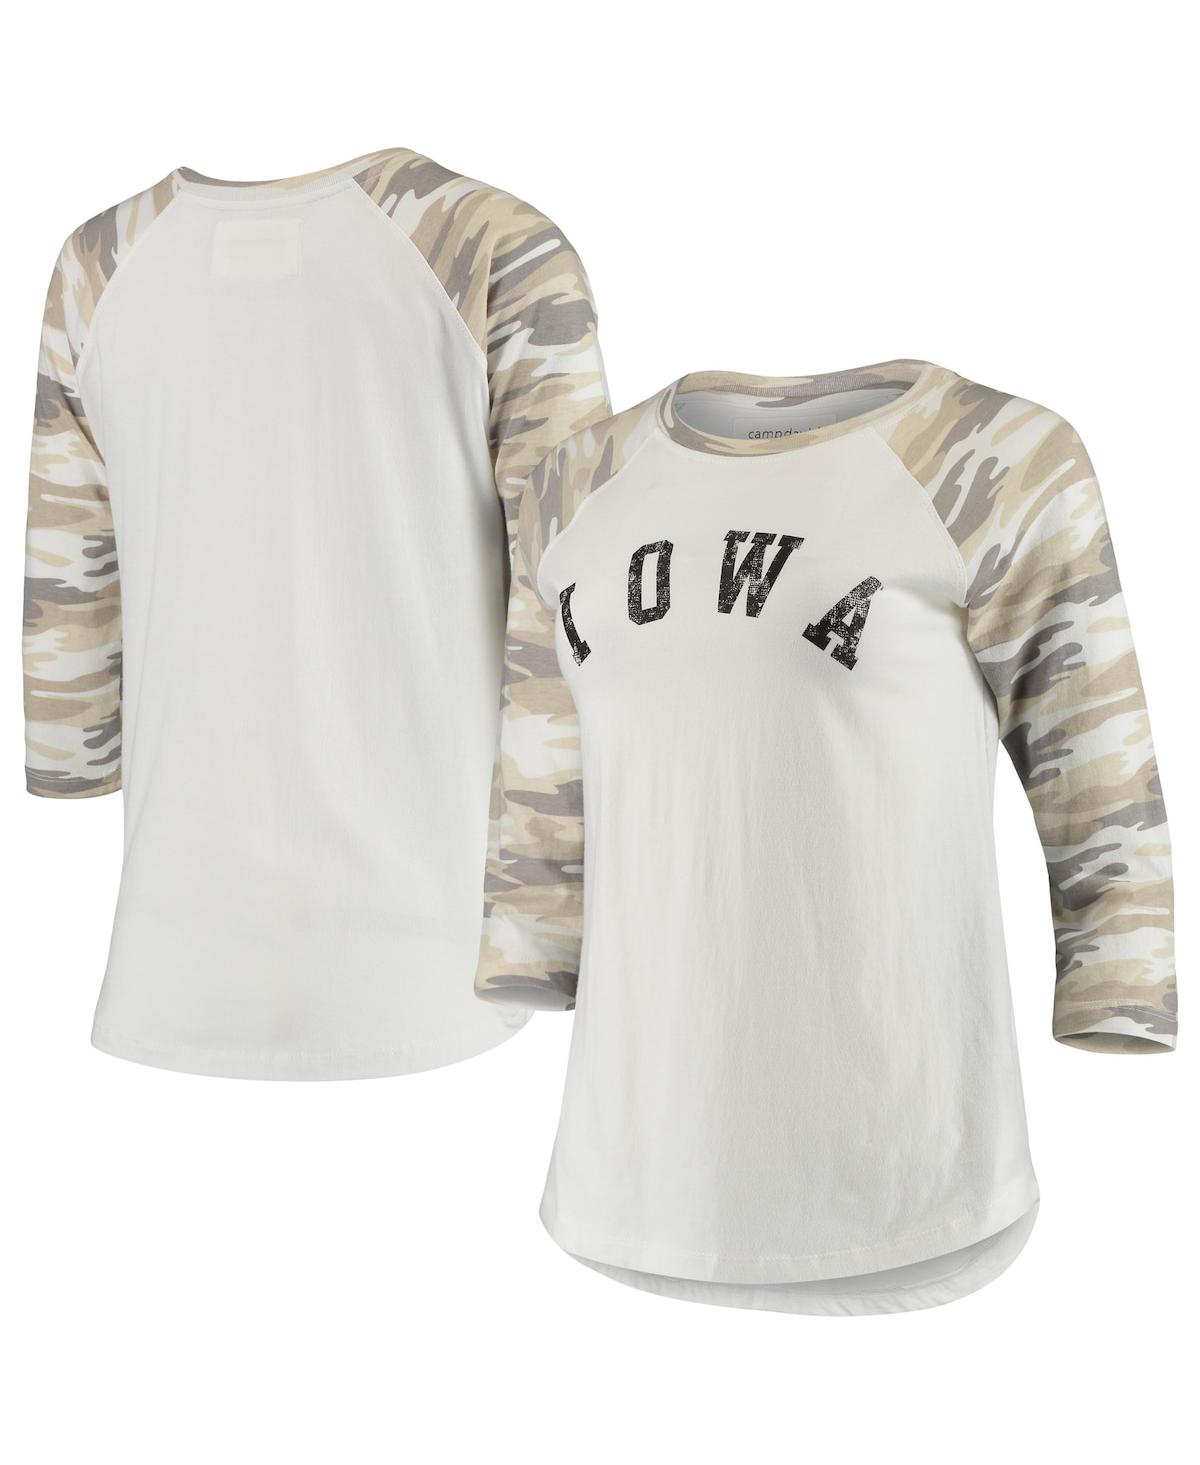 Women's White and Camo Iowa Hawkeyes Boyfriend Baseball Raglan 3/4-Sleeve T-shirt - White, Camo